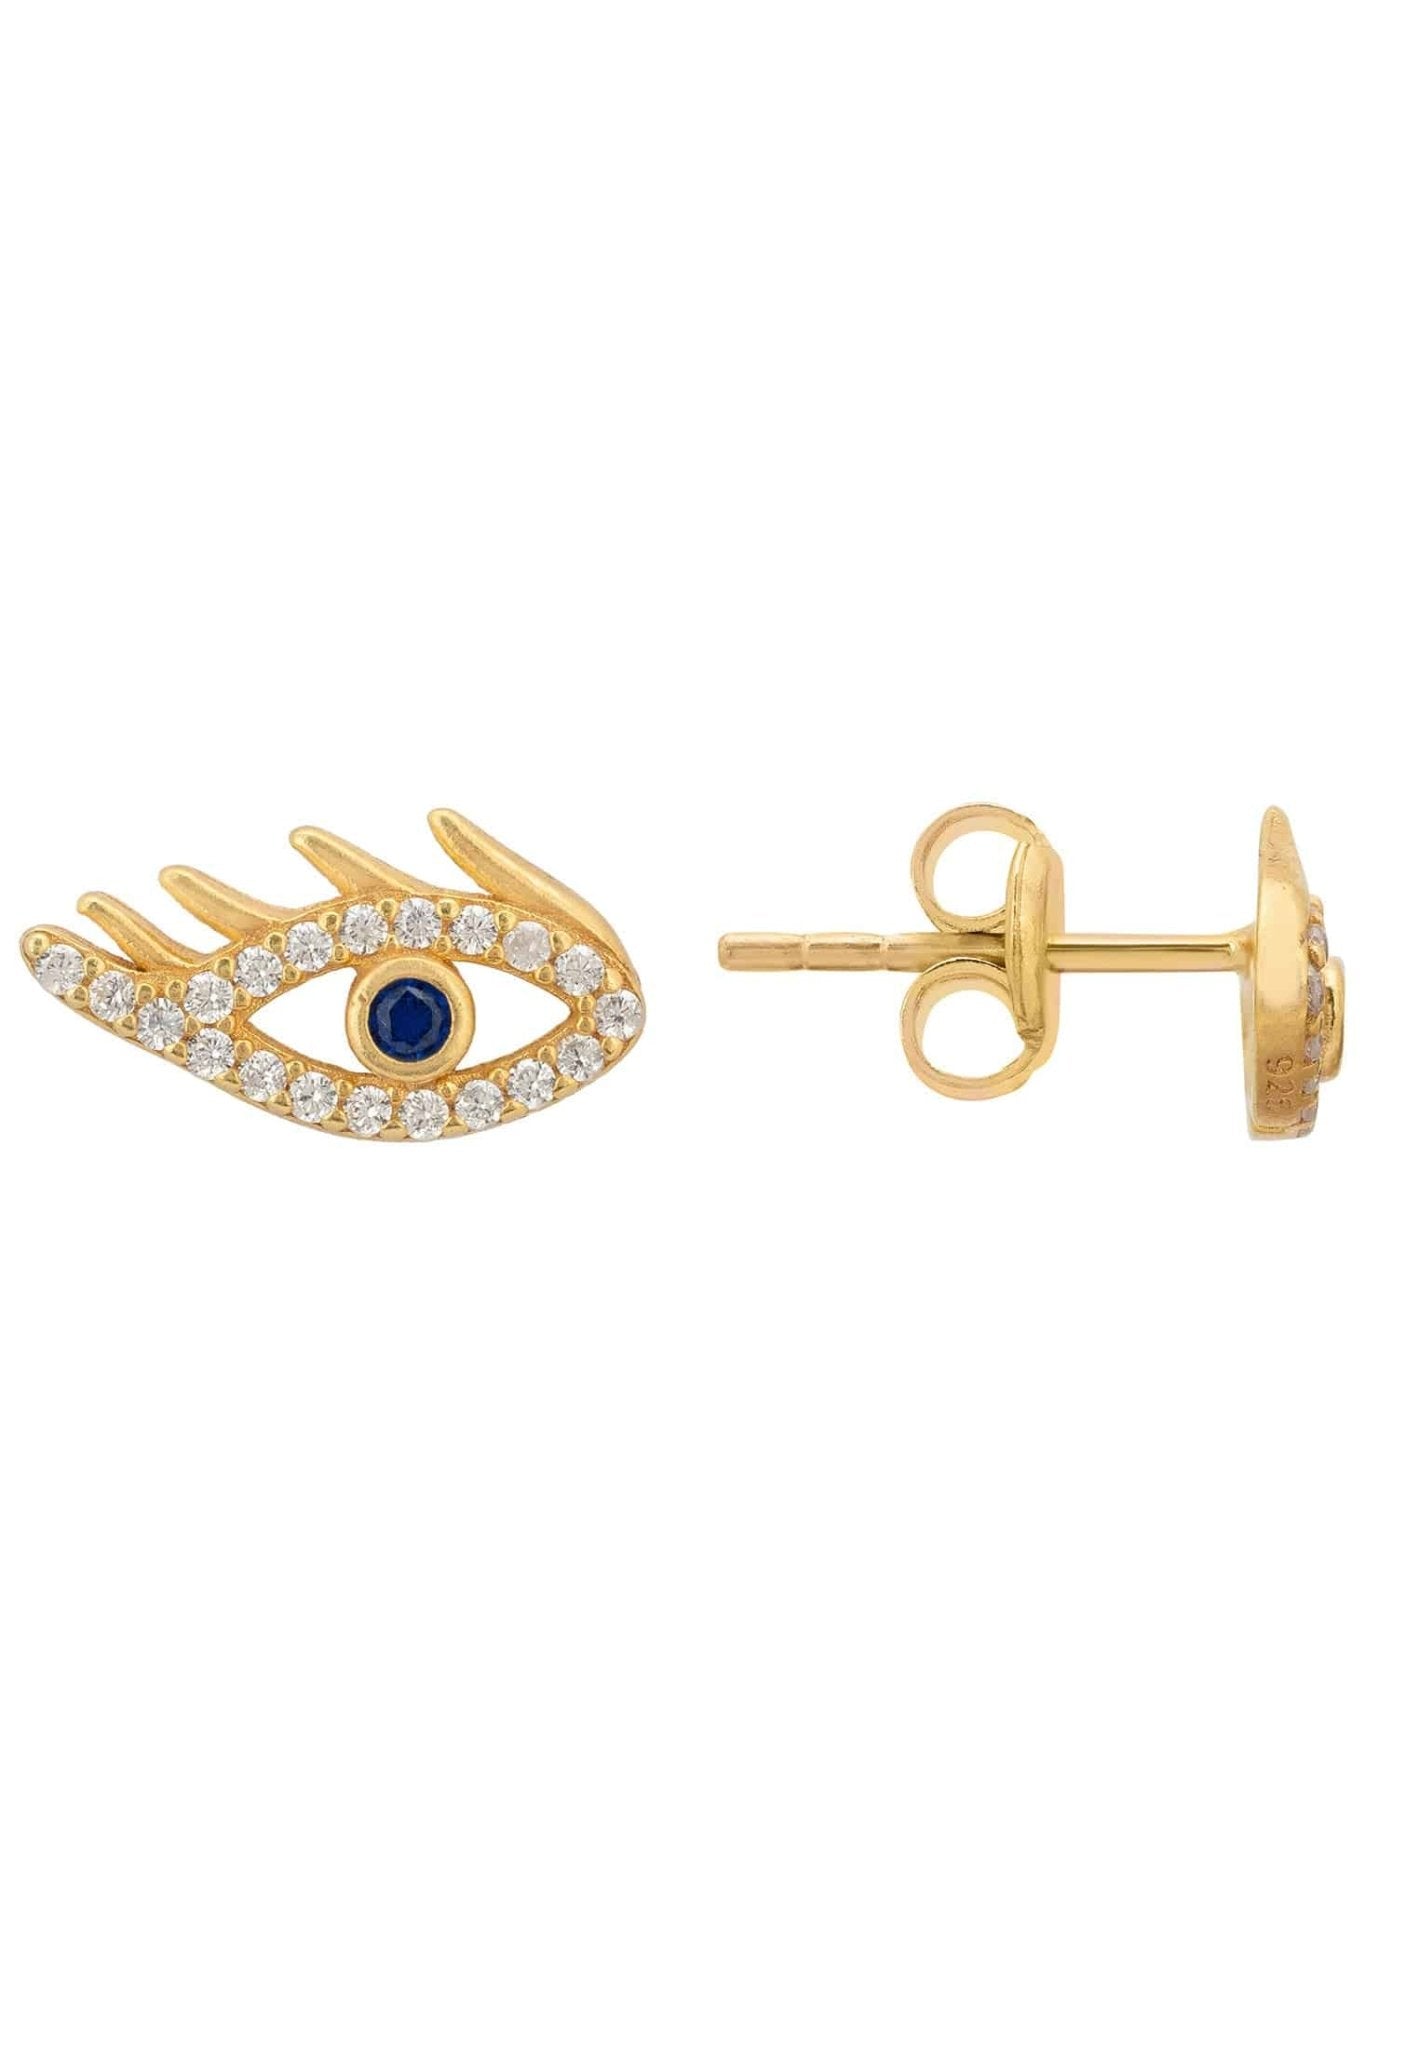 Eye Of Horus Stud Earrings Gold - LATELITA Earrings